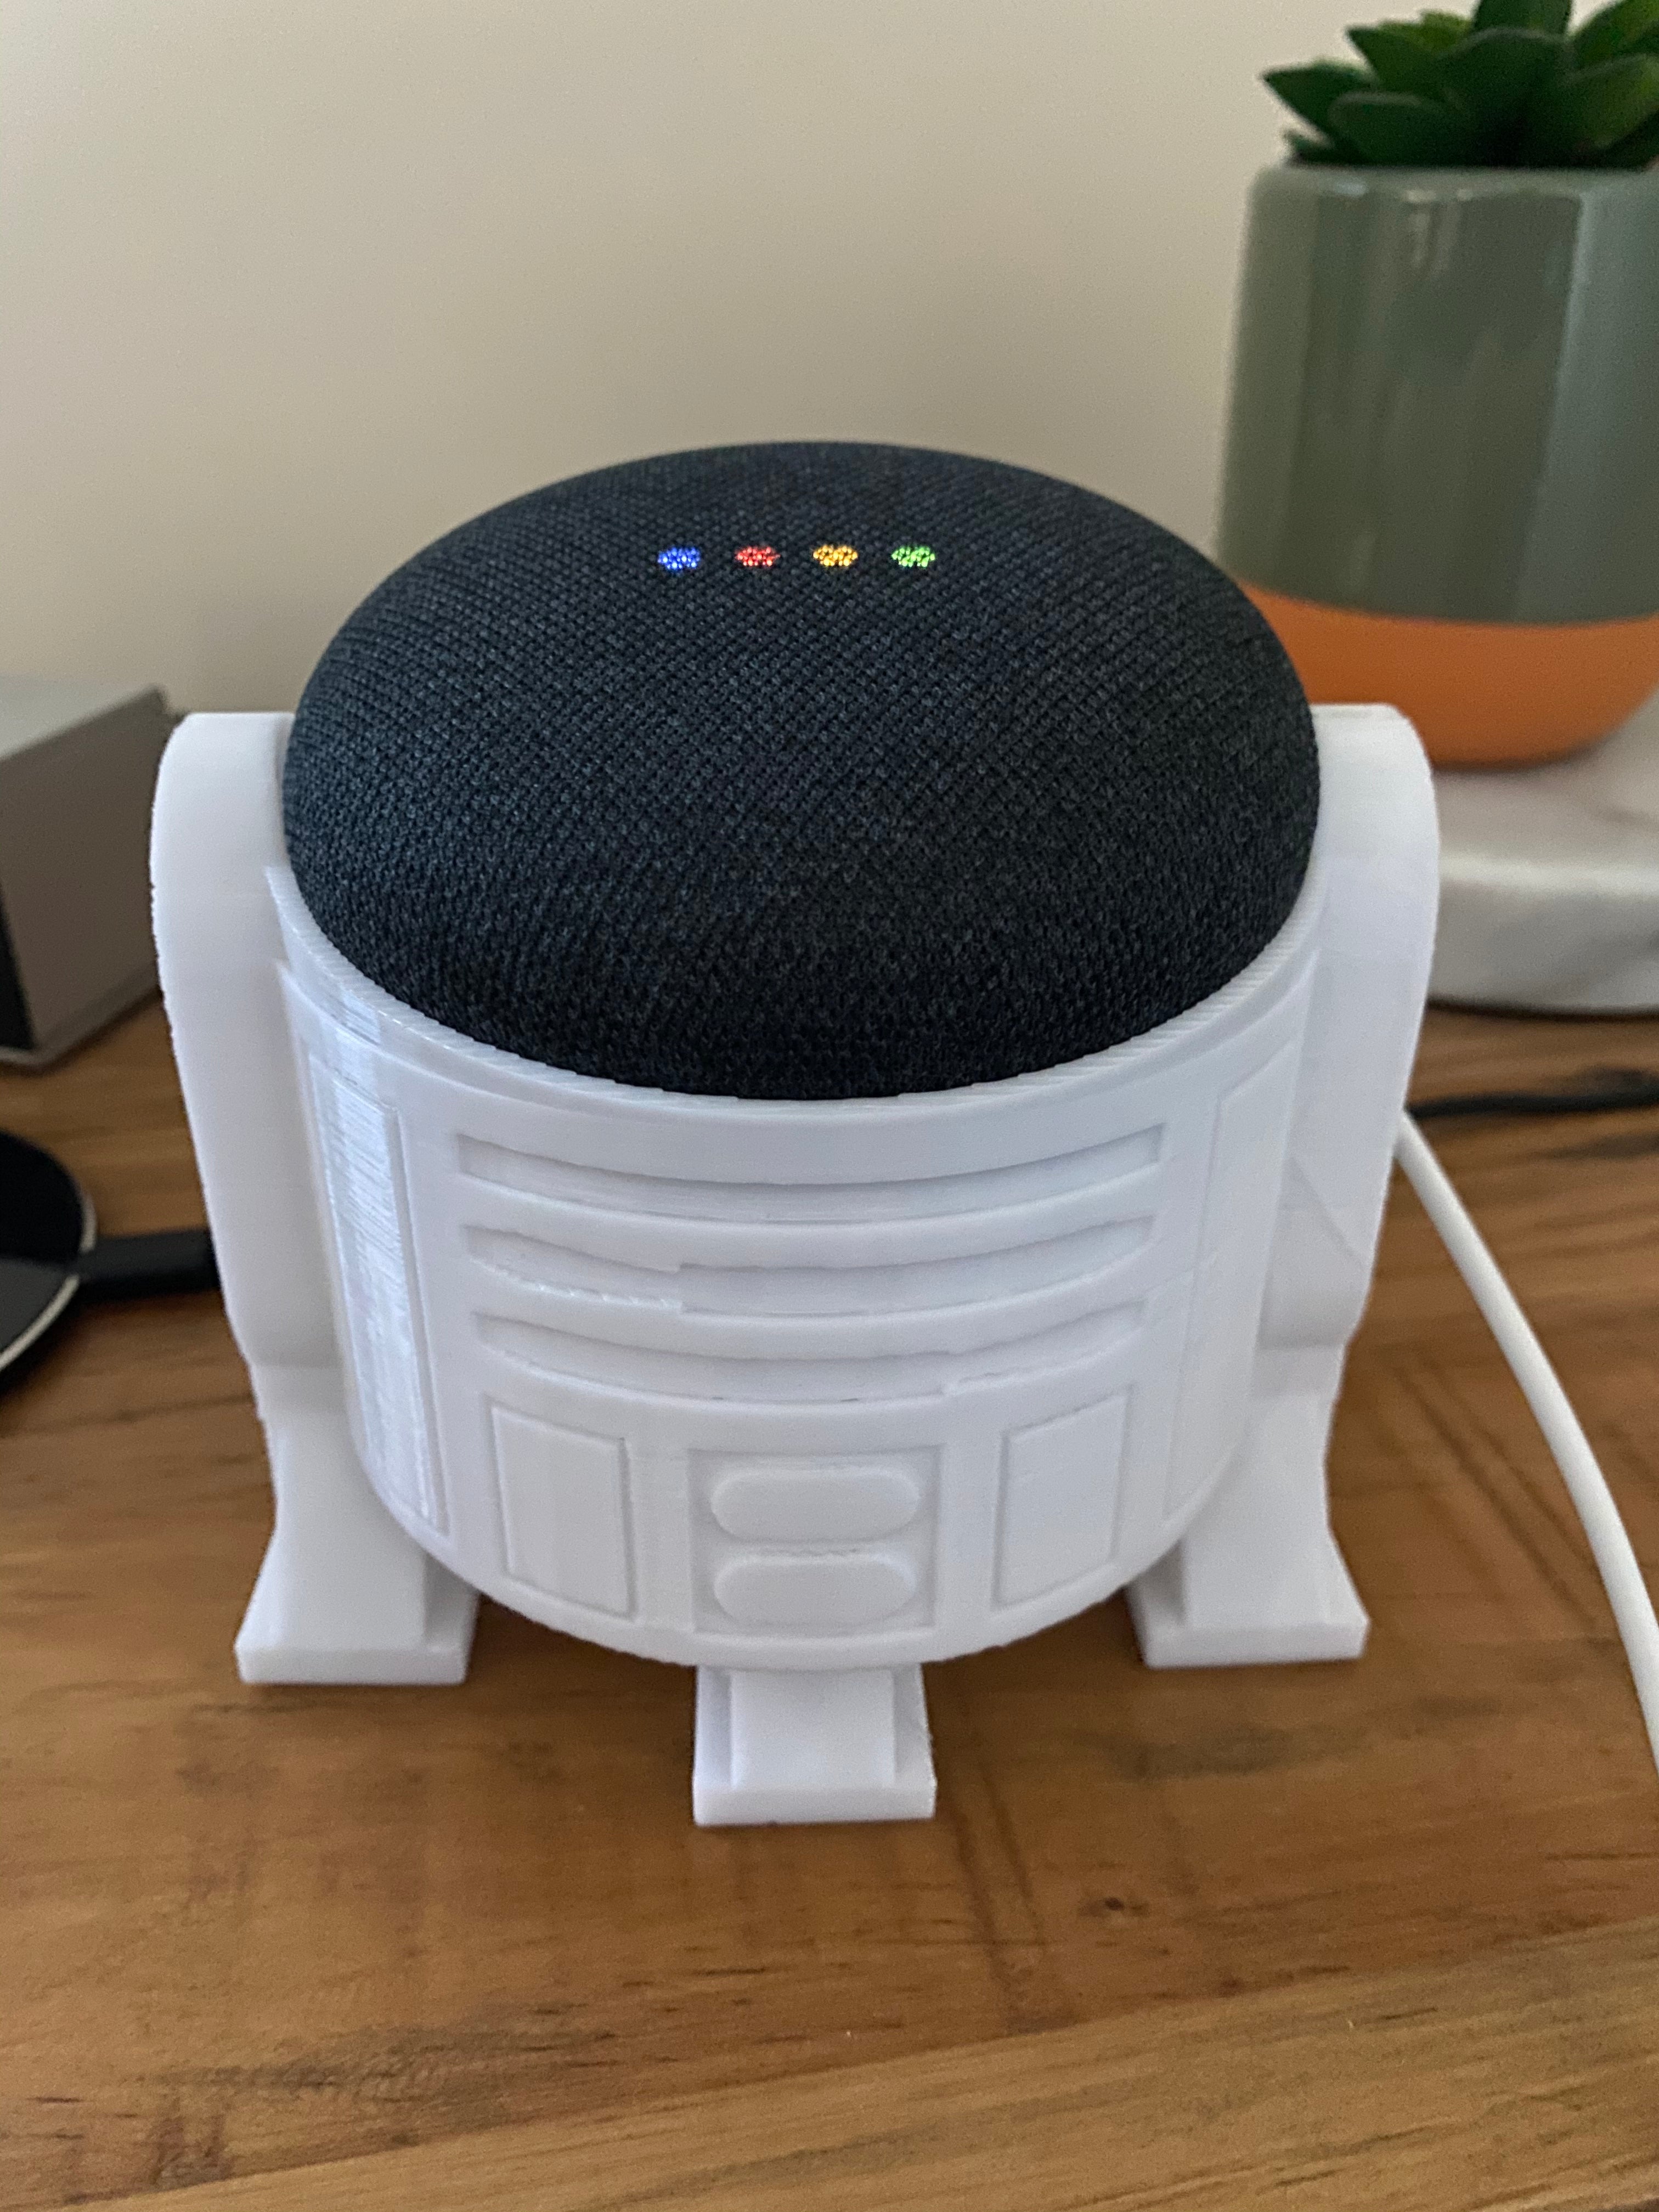 R2D2 fits the Google Nest Mini